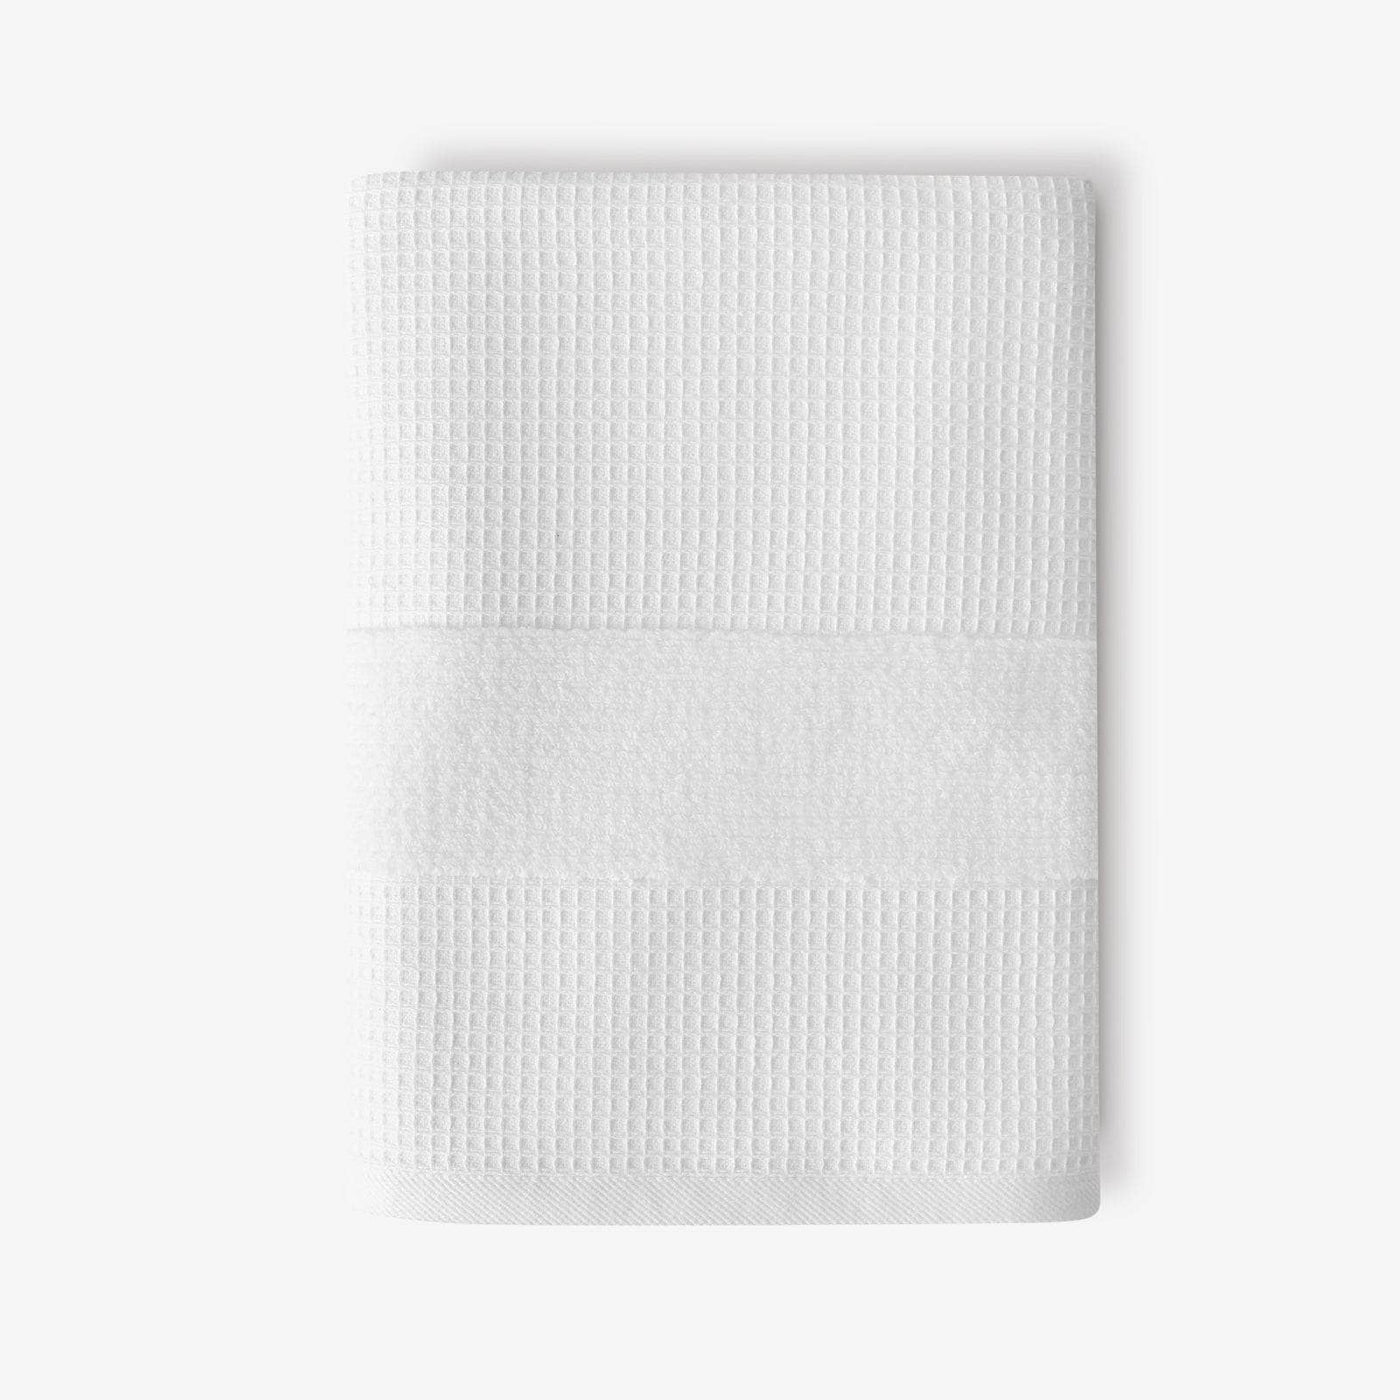 Airsense Waffle 100% Turkish Cotton Bath Towel, White Bath Towels sazy.com